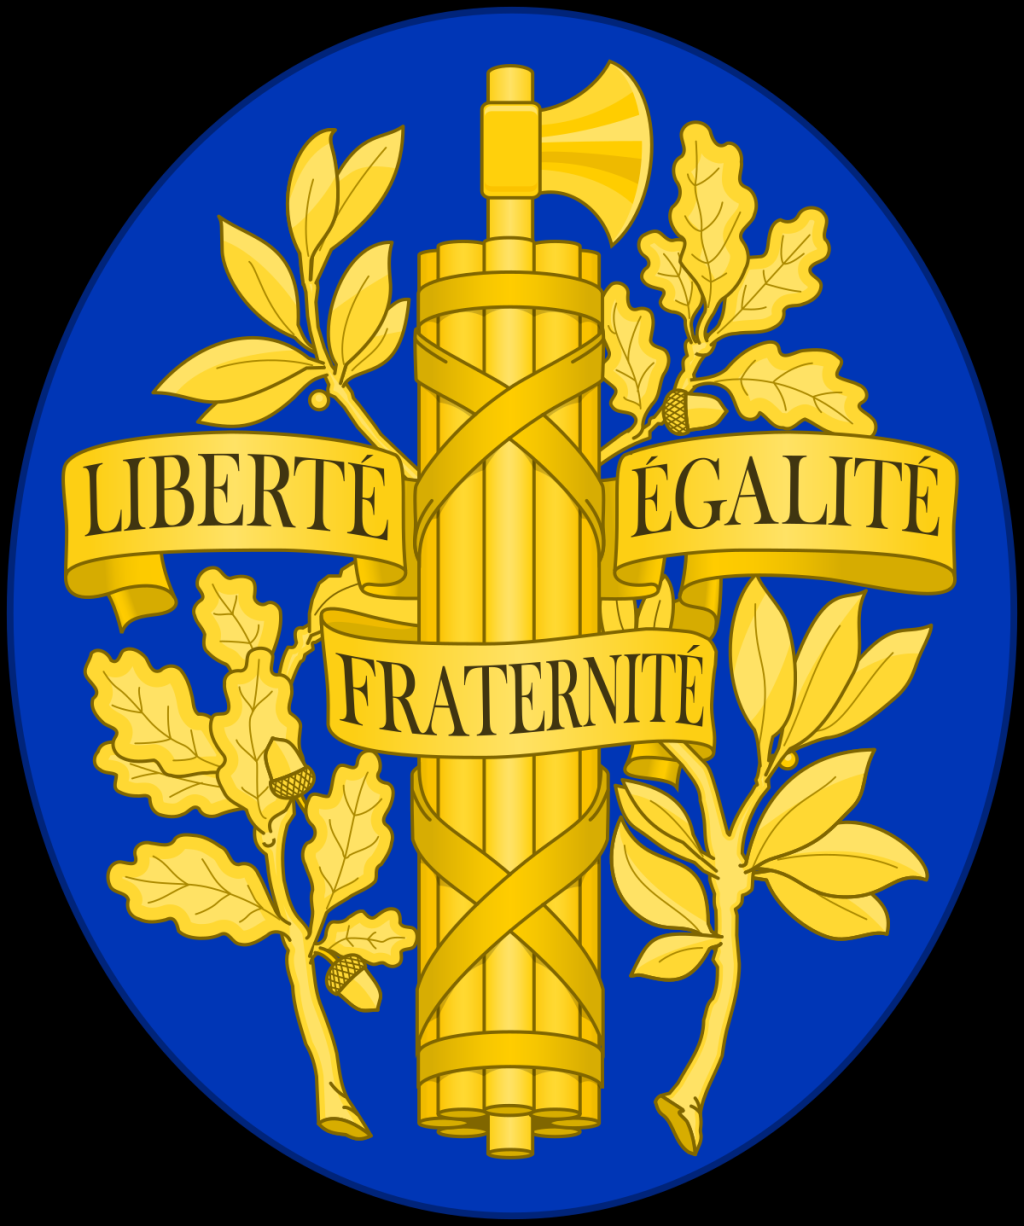 french politics now - Politics of France - Wikipedia